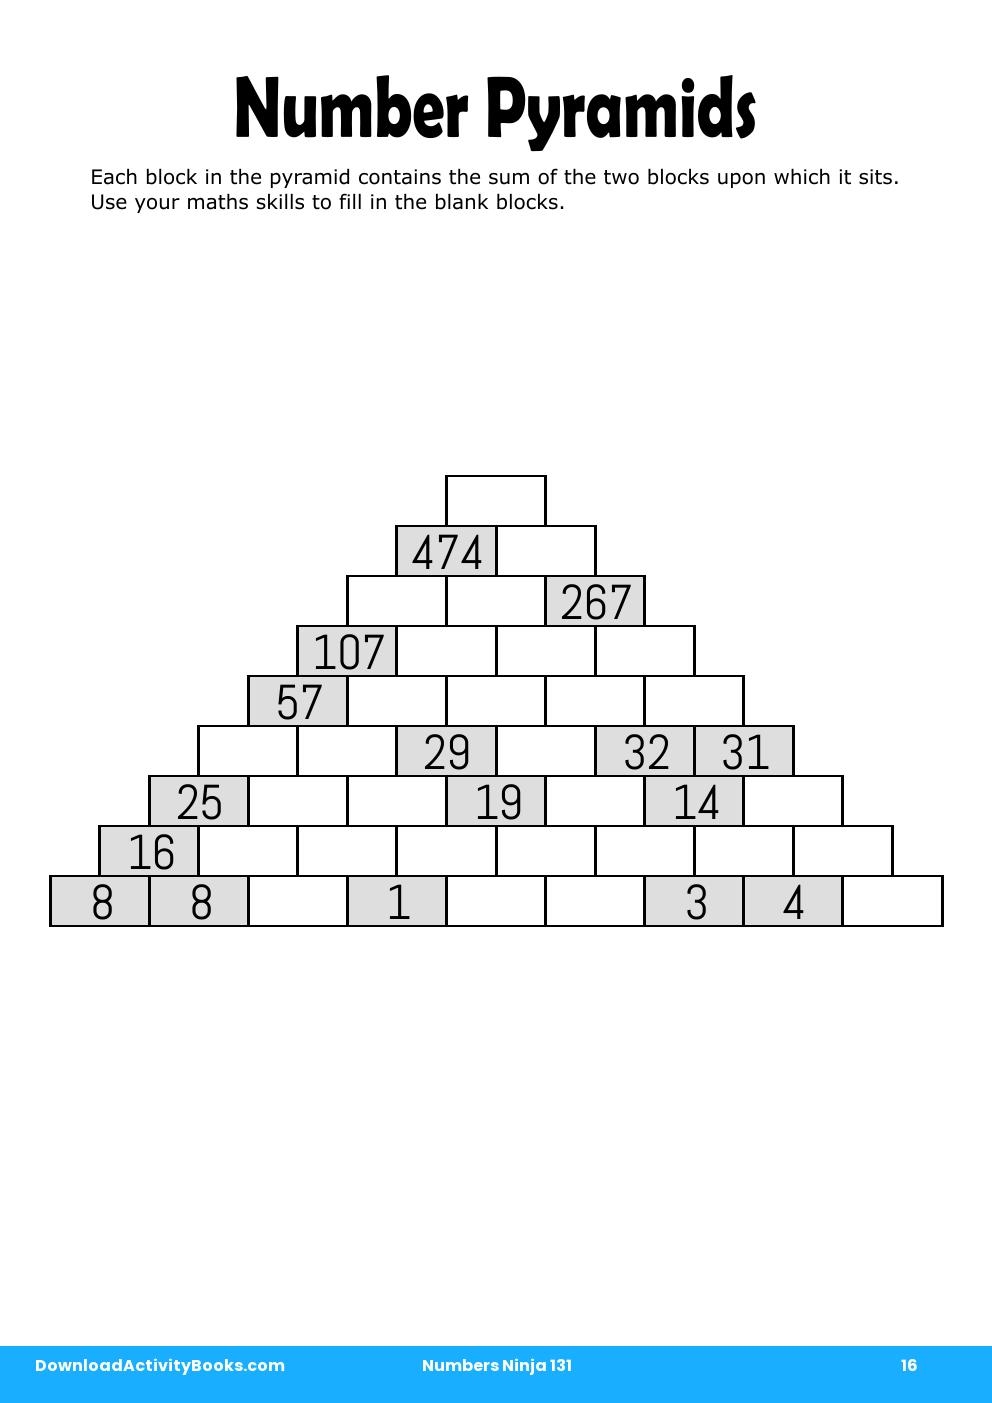 Number Pyramids in Numbers Ninja 131